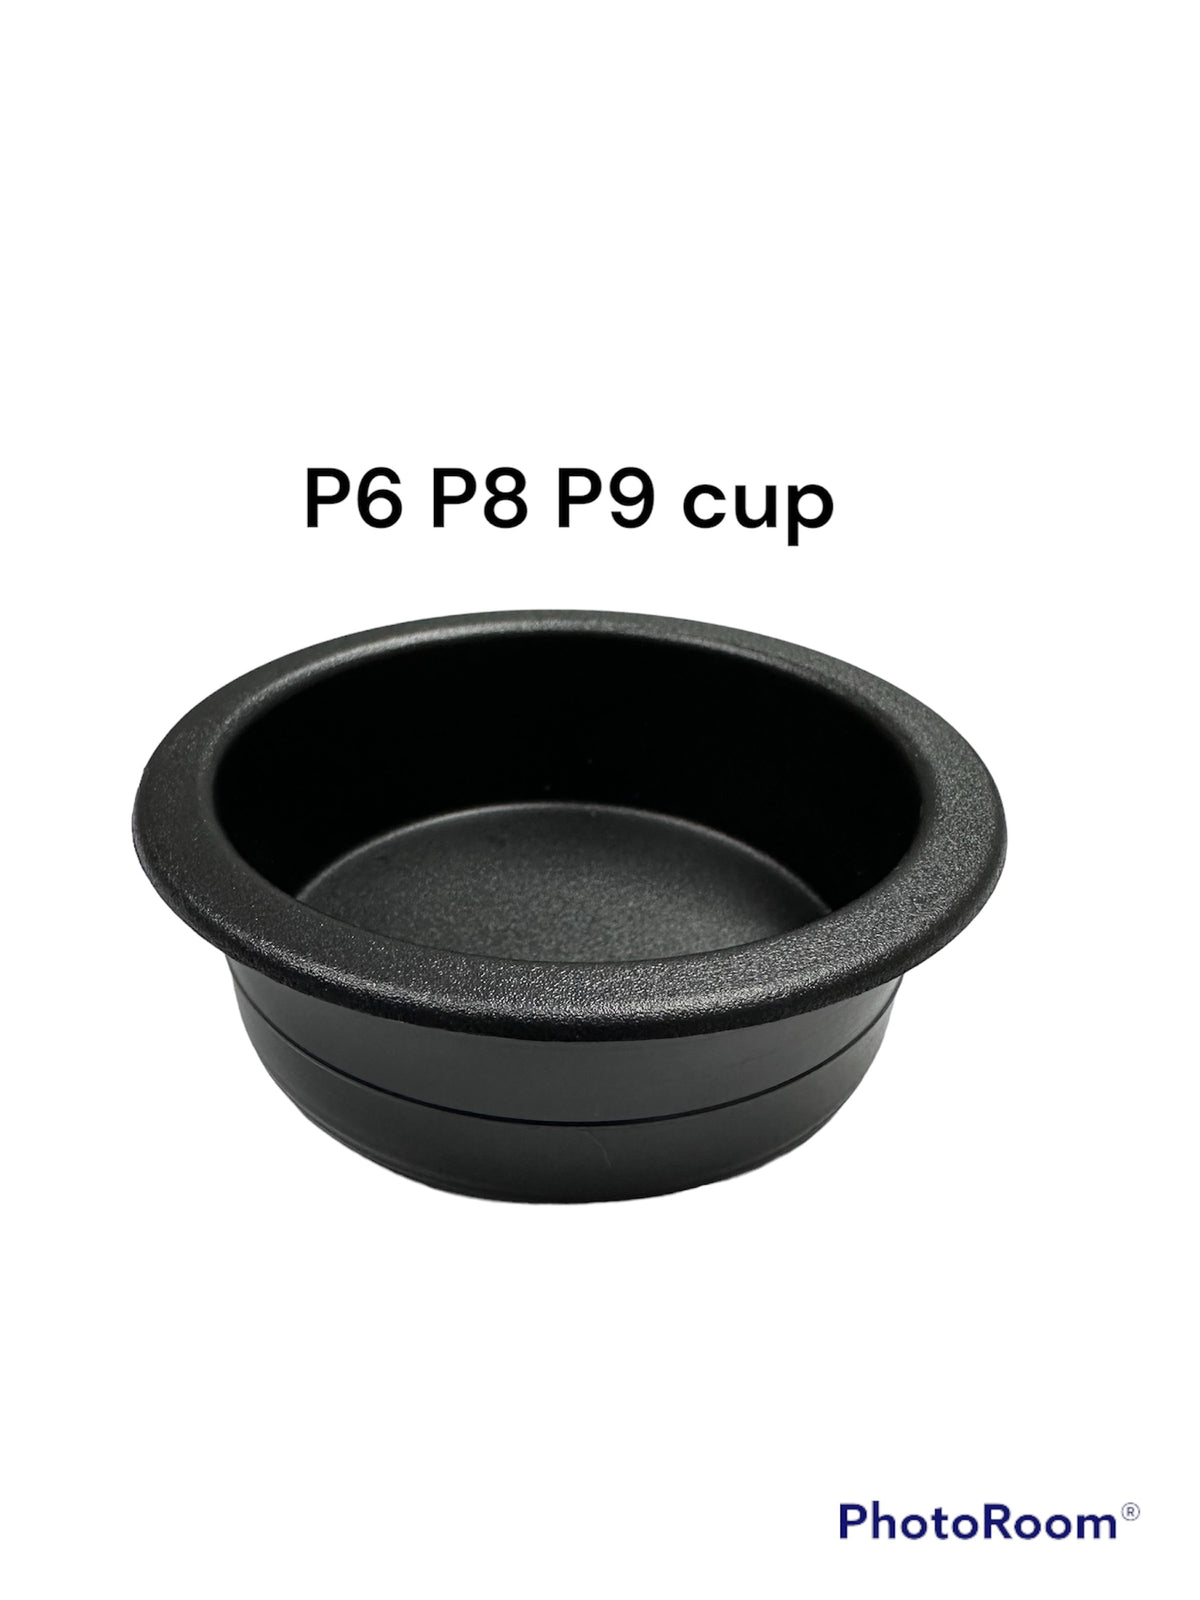 P4 P6 P9 cup holder